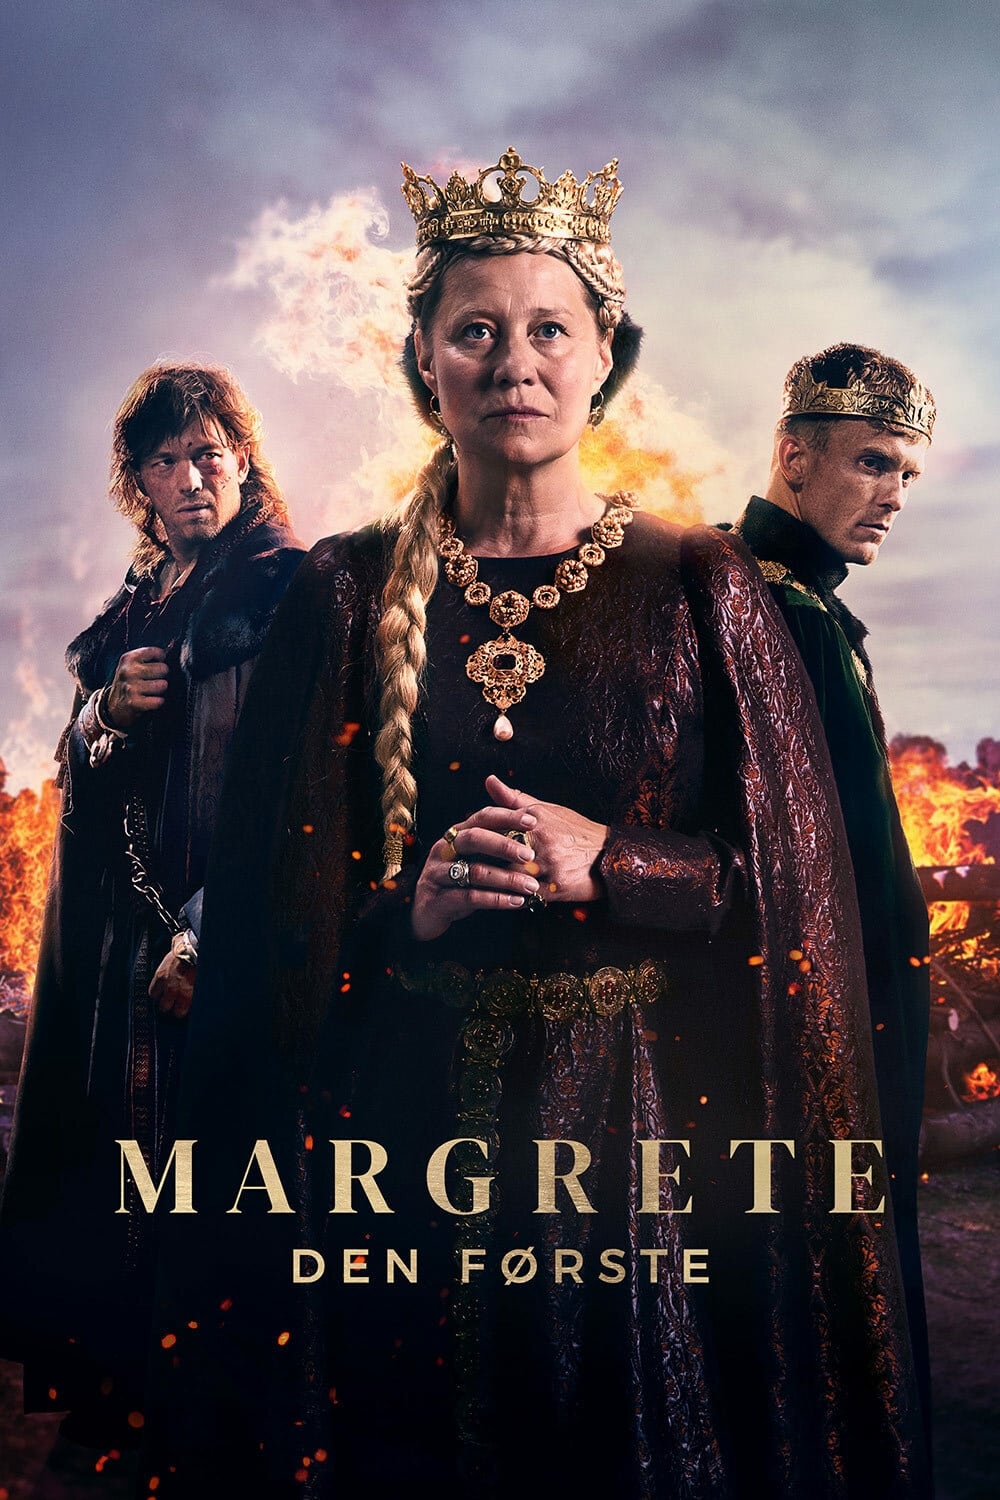 Margrete, reina del norte (2021)